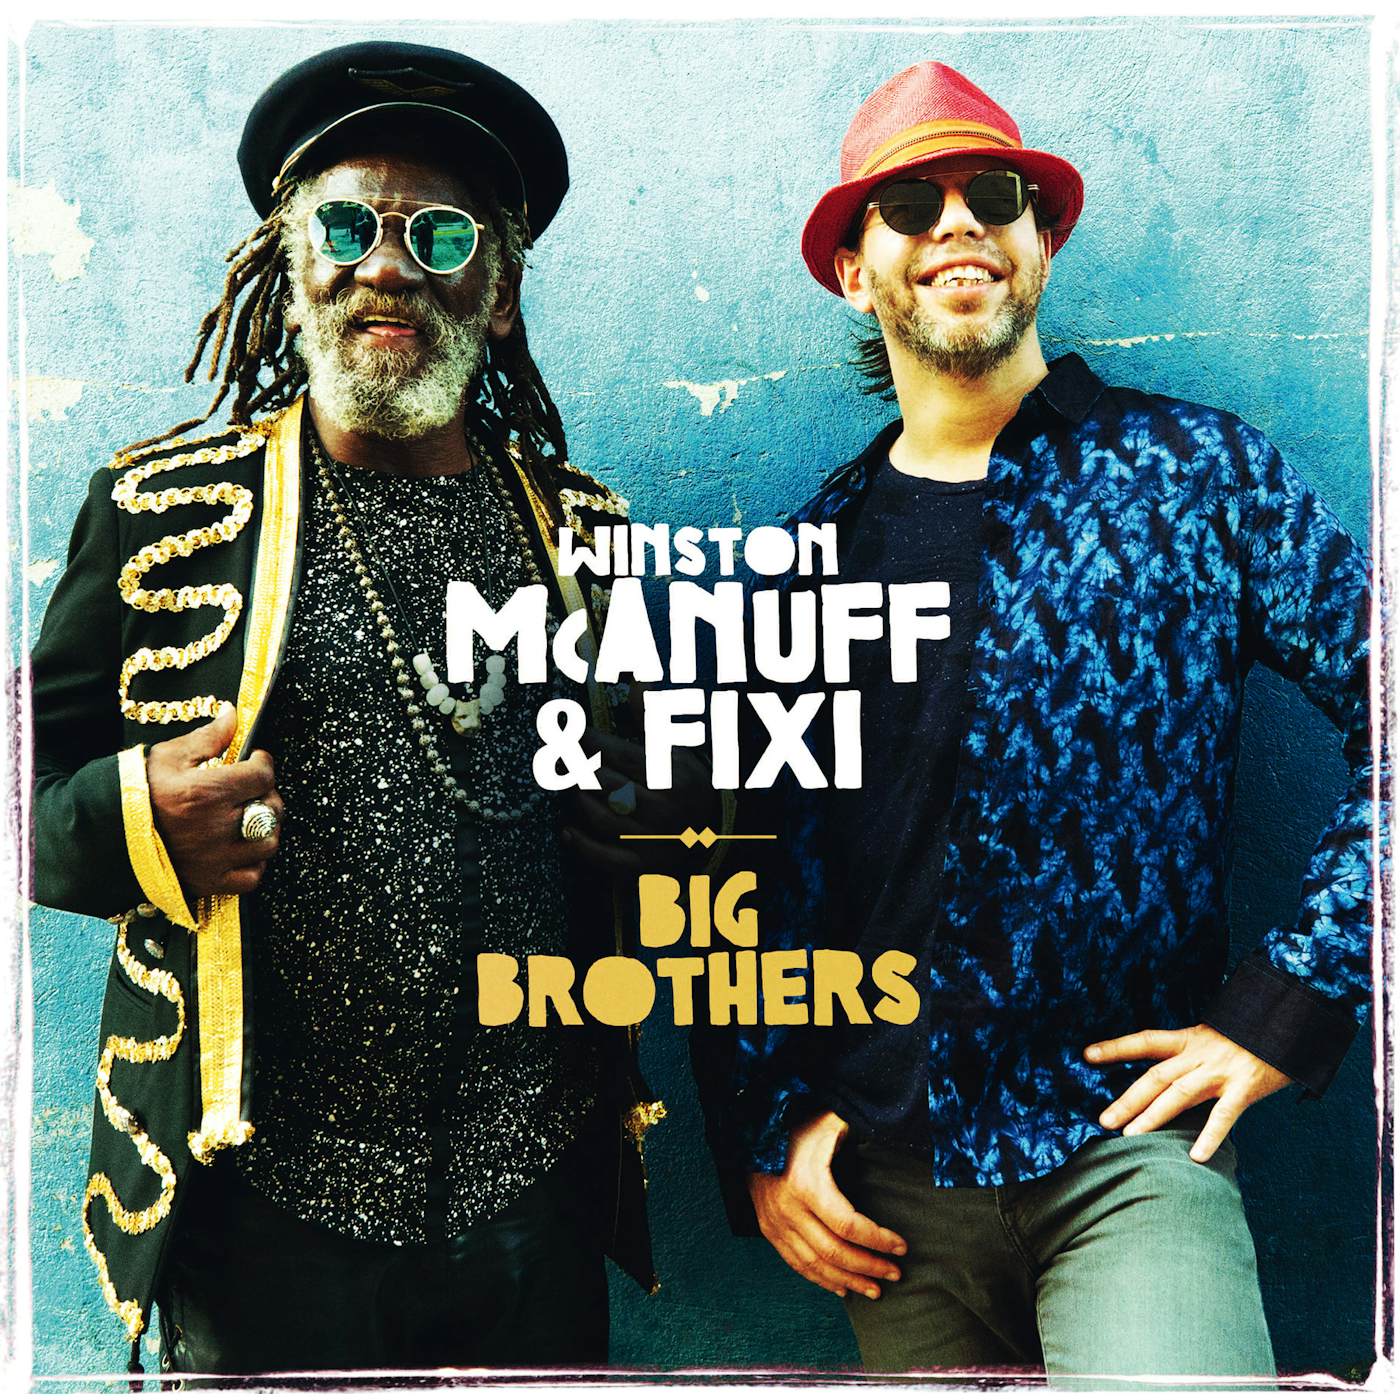 Winston McAnuff & Fixi Big Brothers Vinyl Record